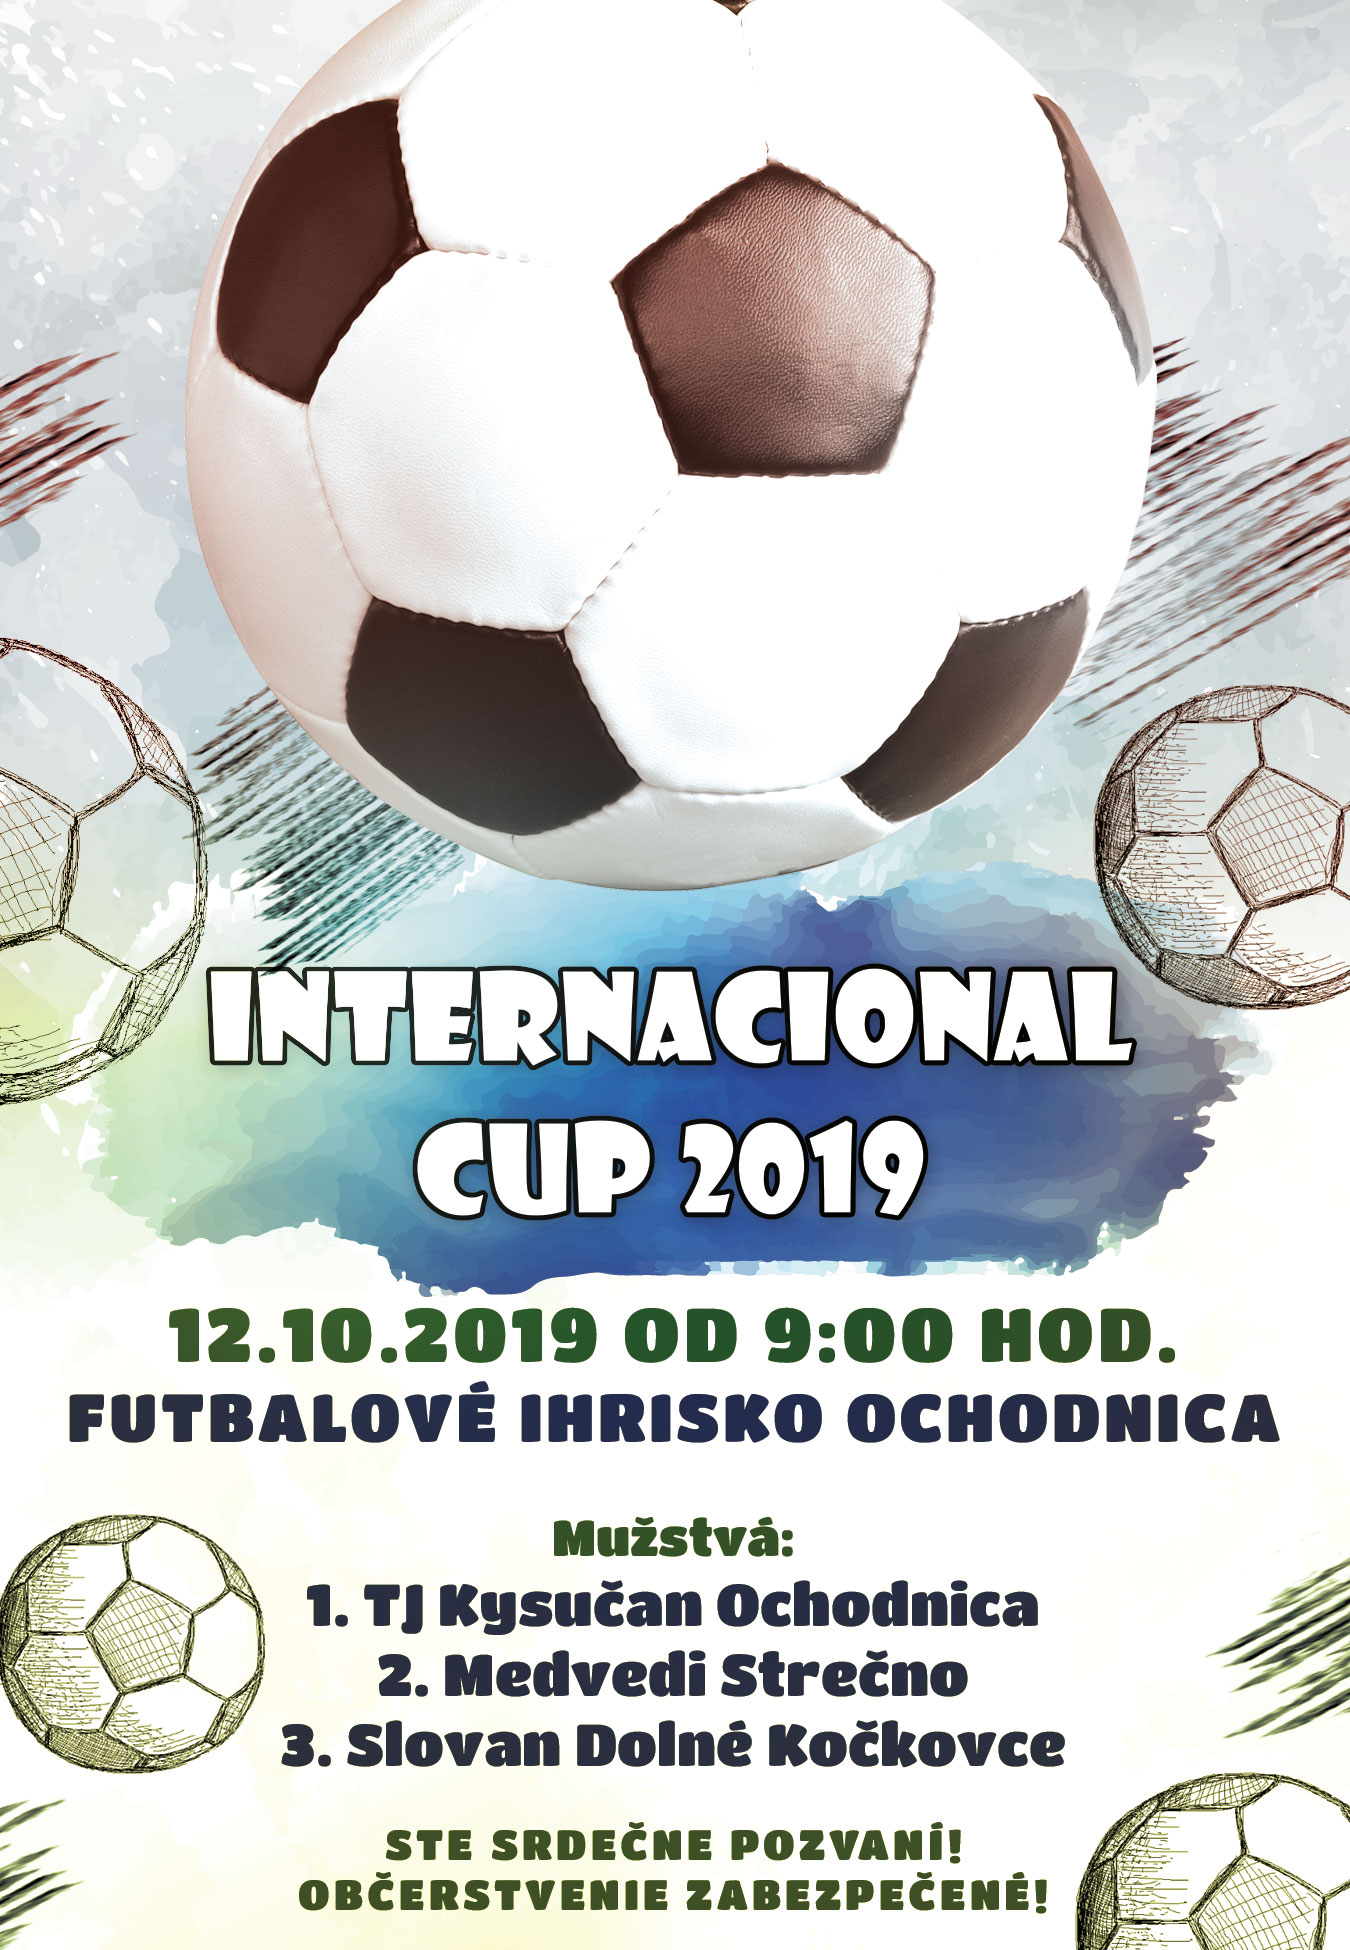 Internacional Cup 2019 Ochodnica